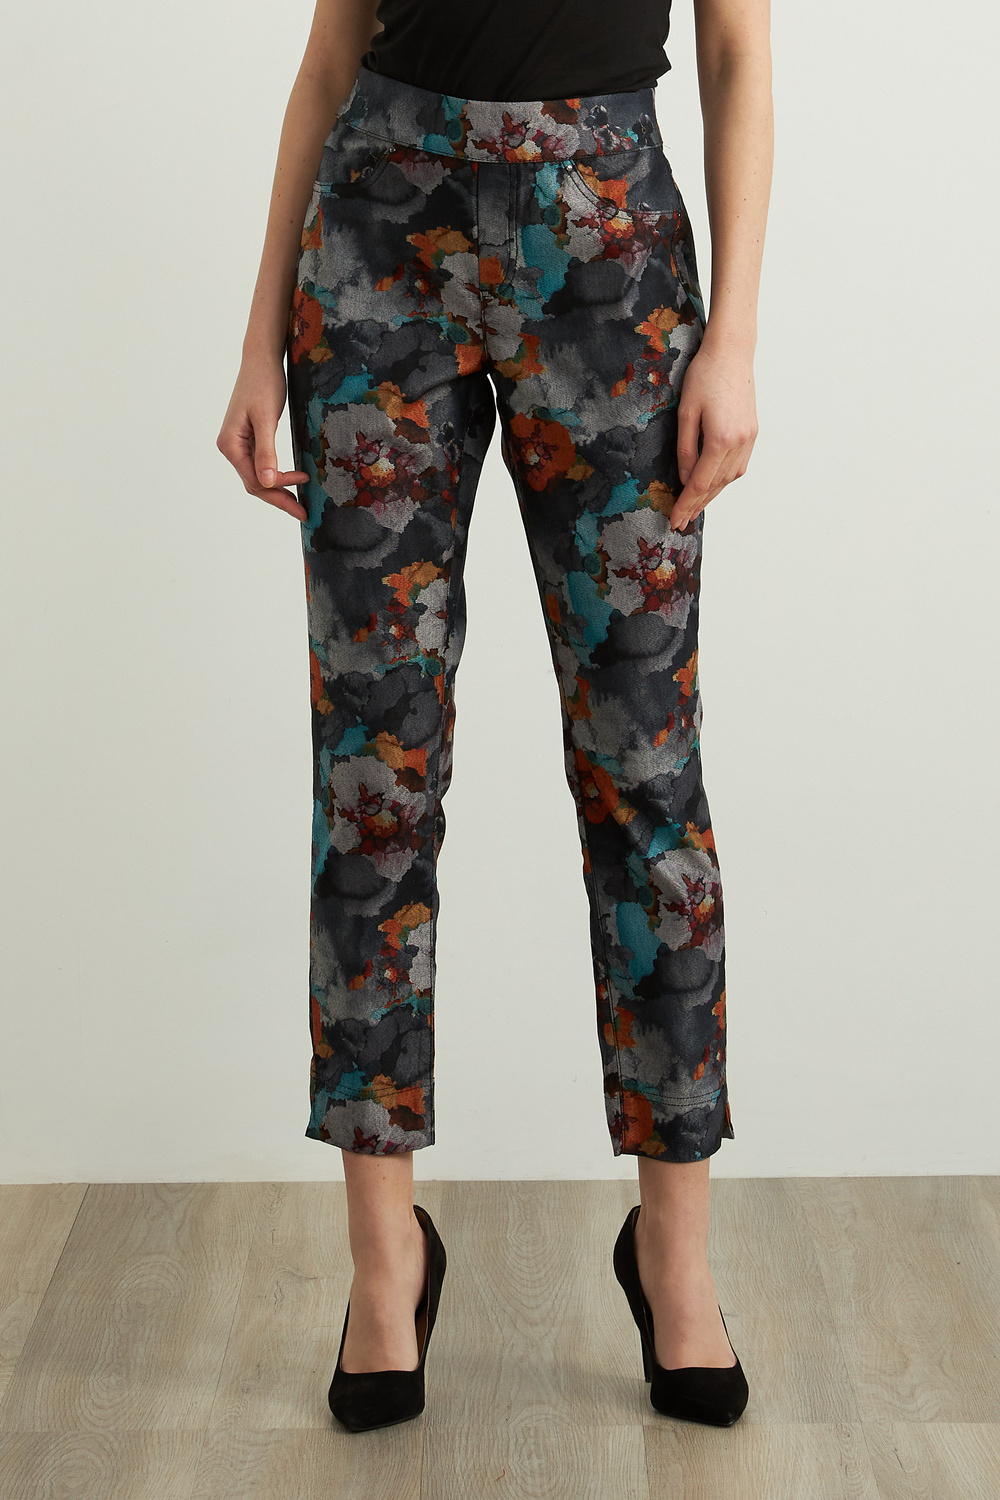 Joseph Ribkoff Floral Motif Jeans Style 213997. Charcoal/multi